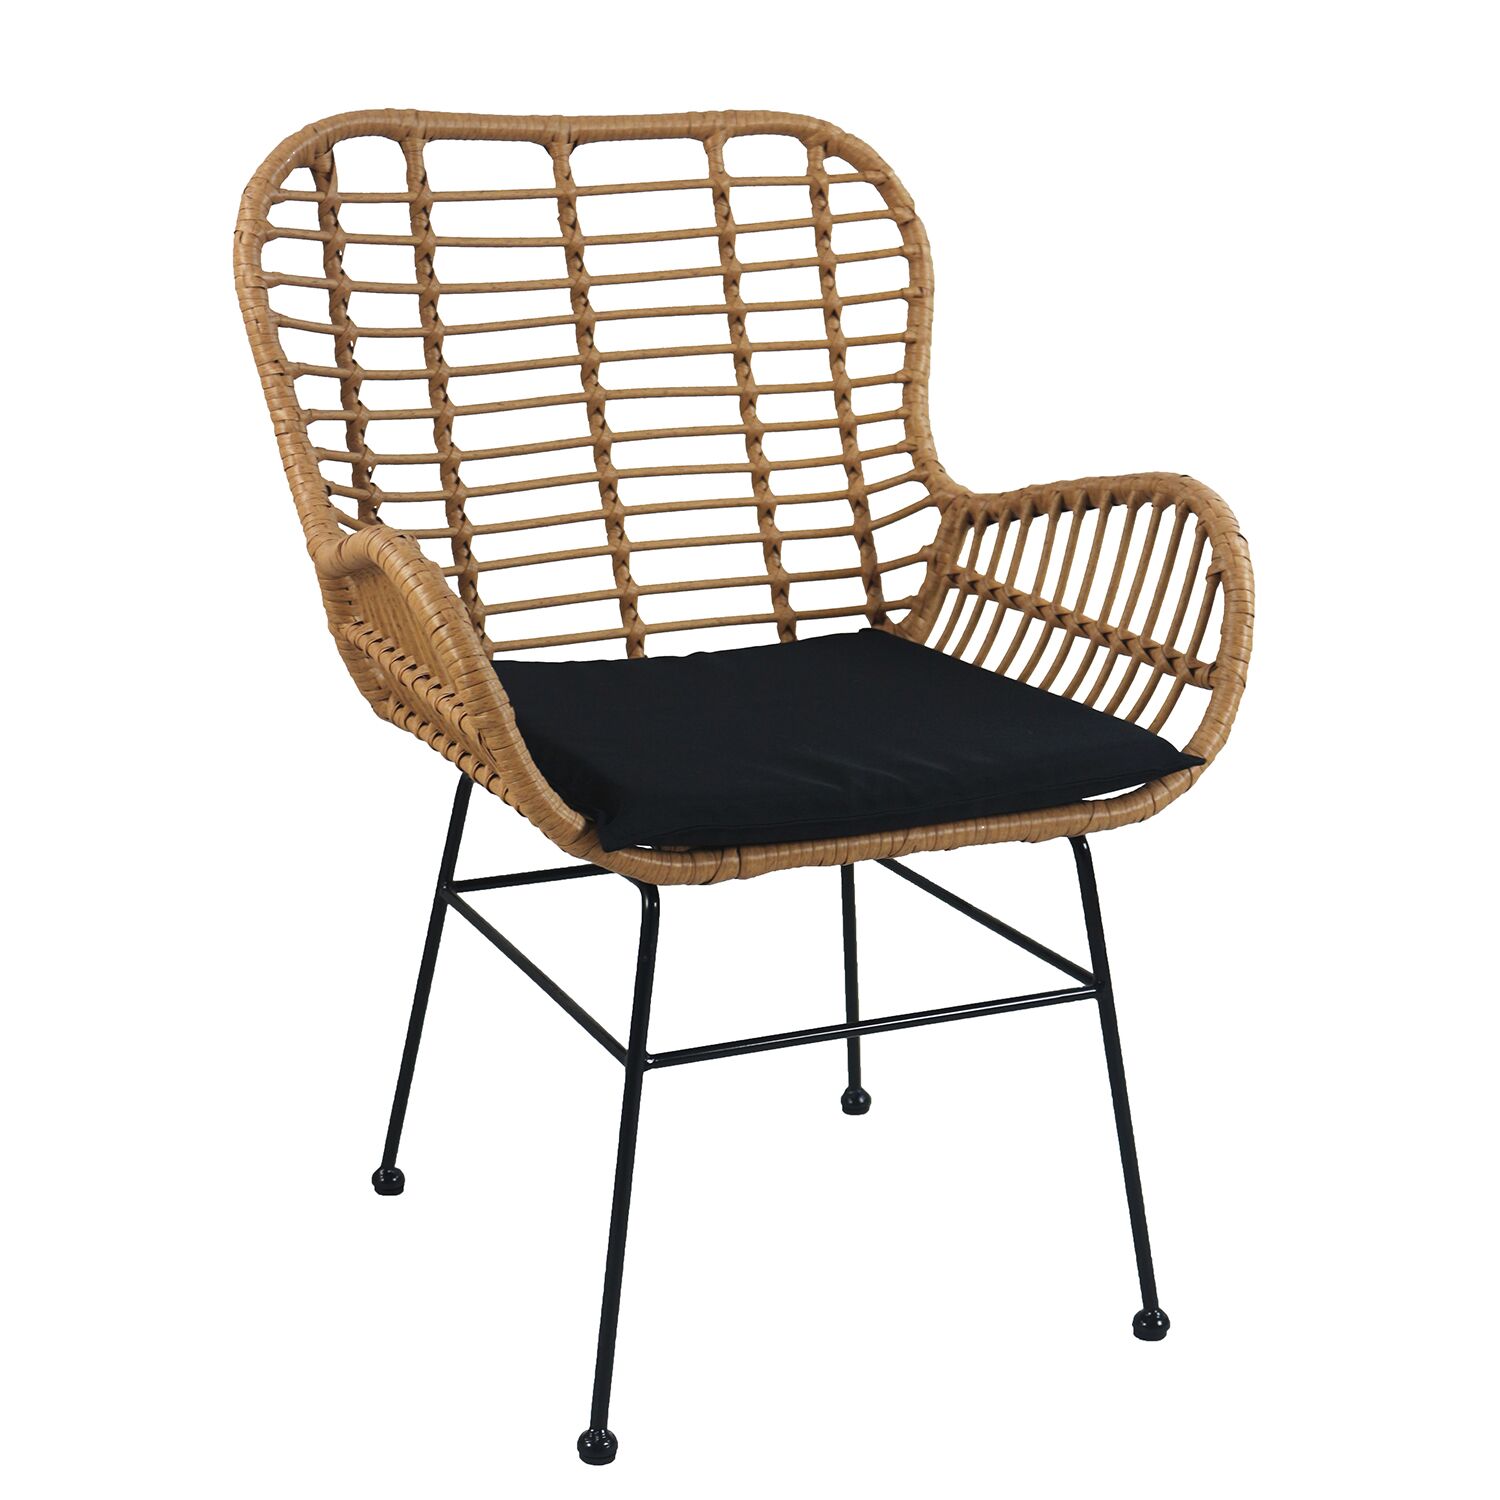 ABUDIUS Garden Chair Natural/Black Metal/Rattan 60x60x85cm